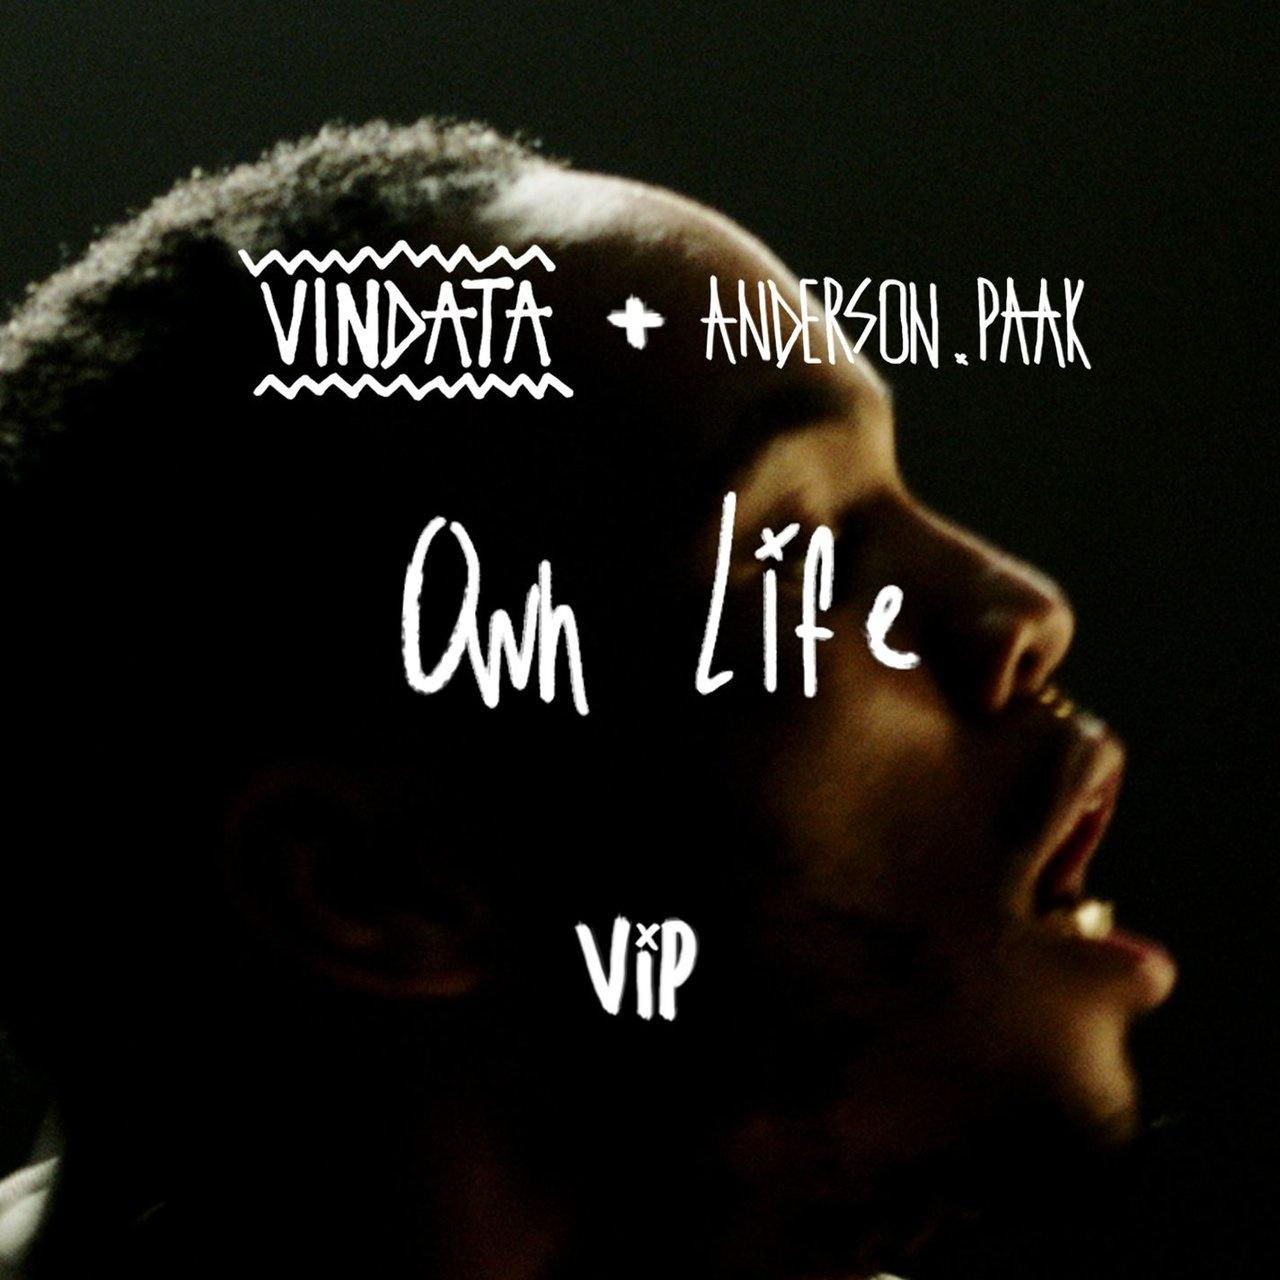 Vindata - Own Life VIP